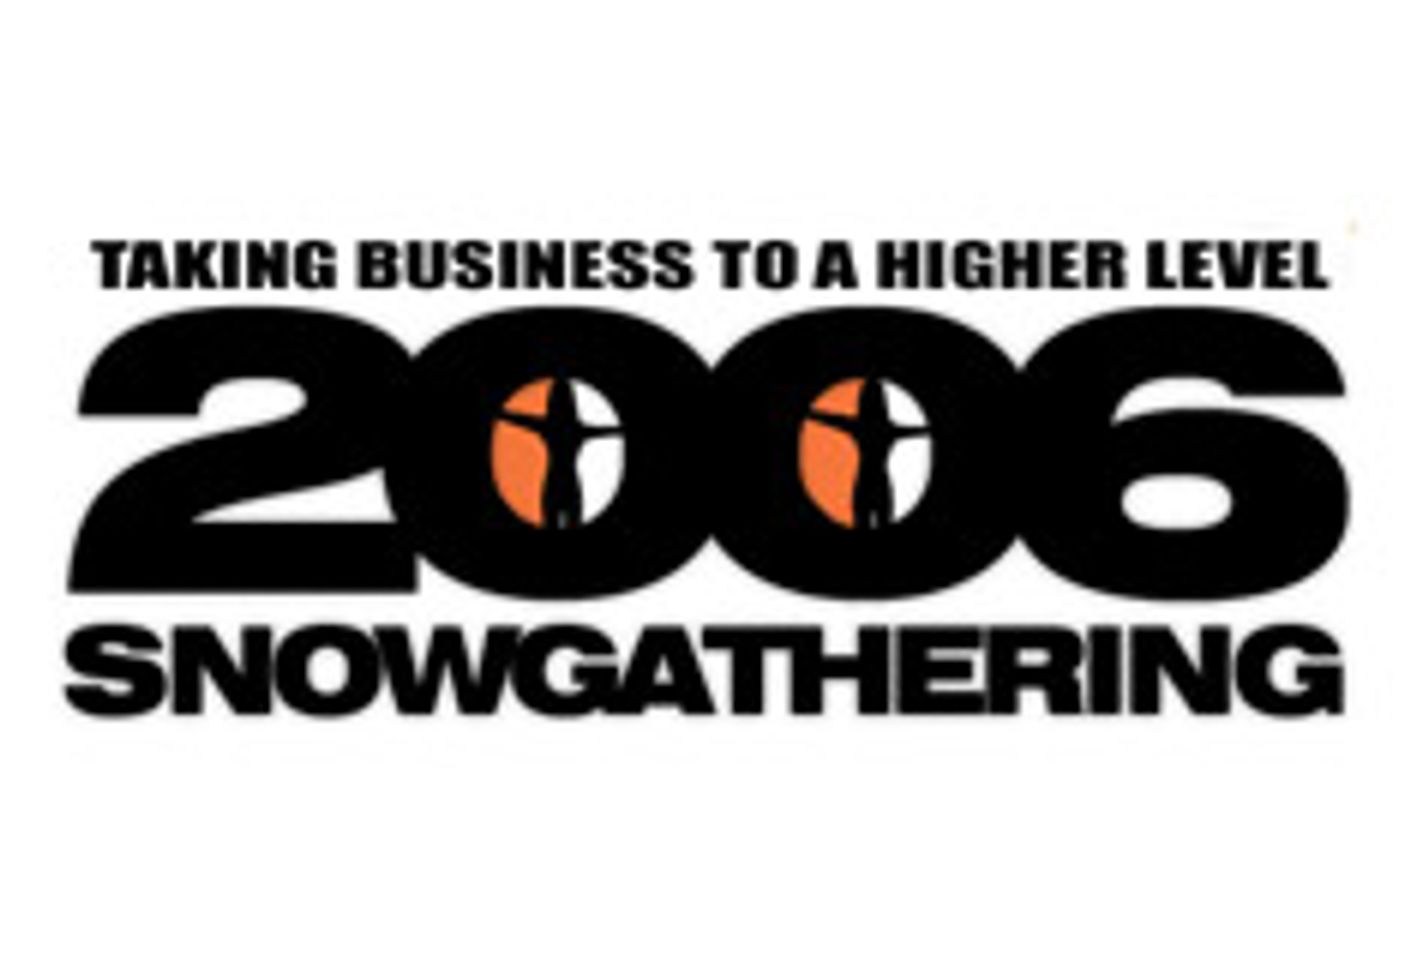 Freeones.com Announces Snowgathering 2006